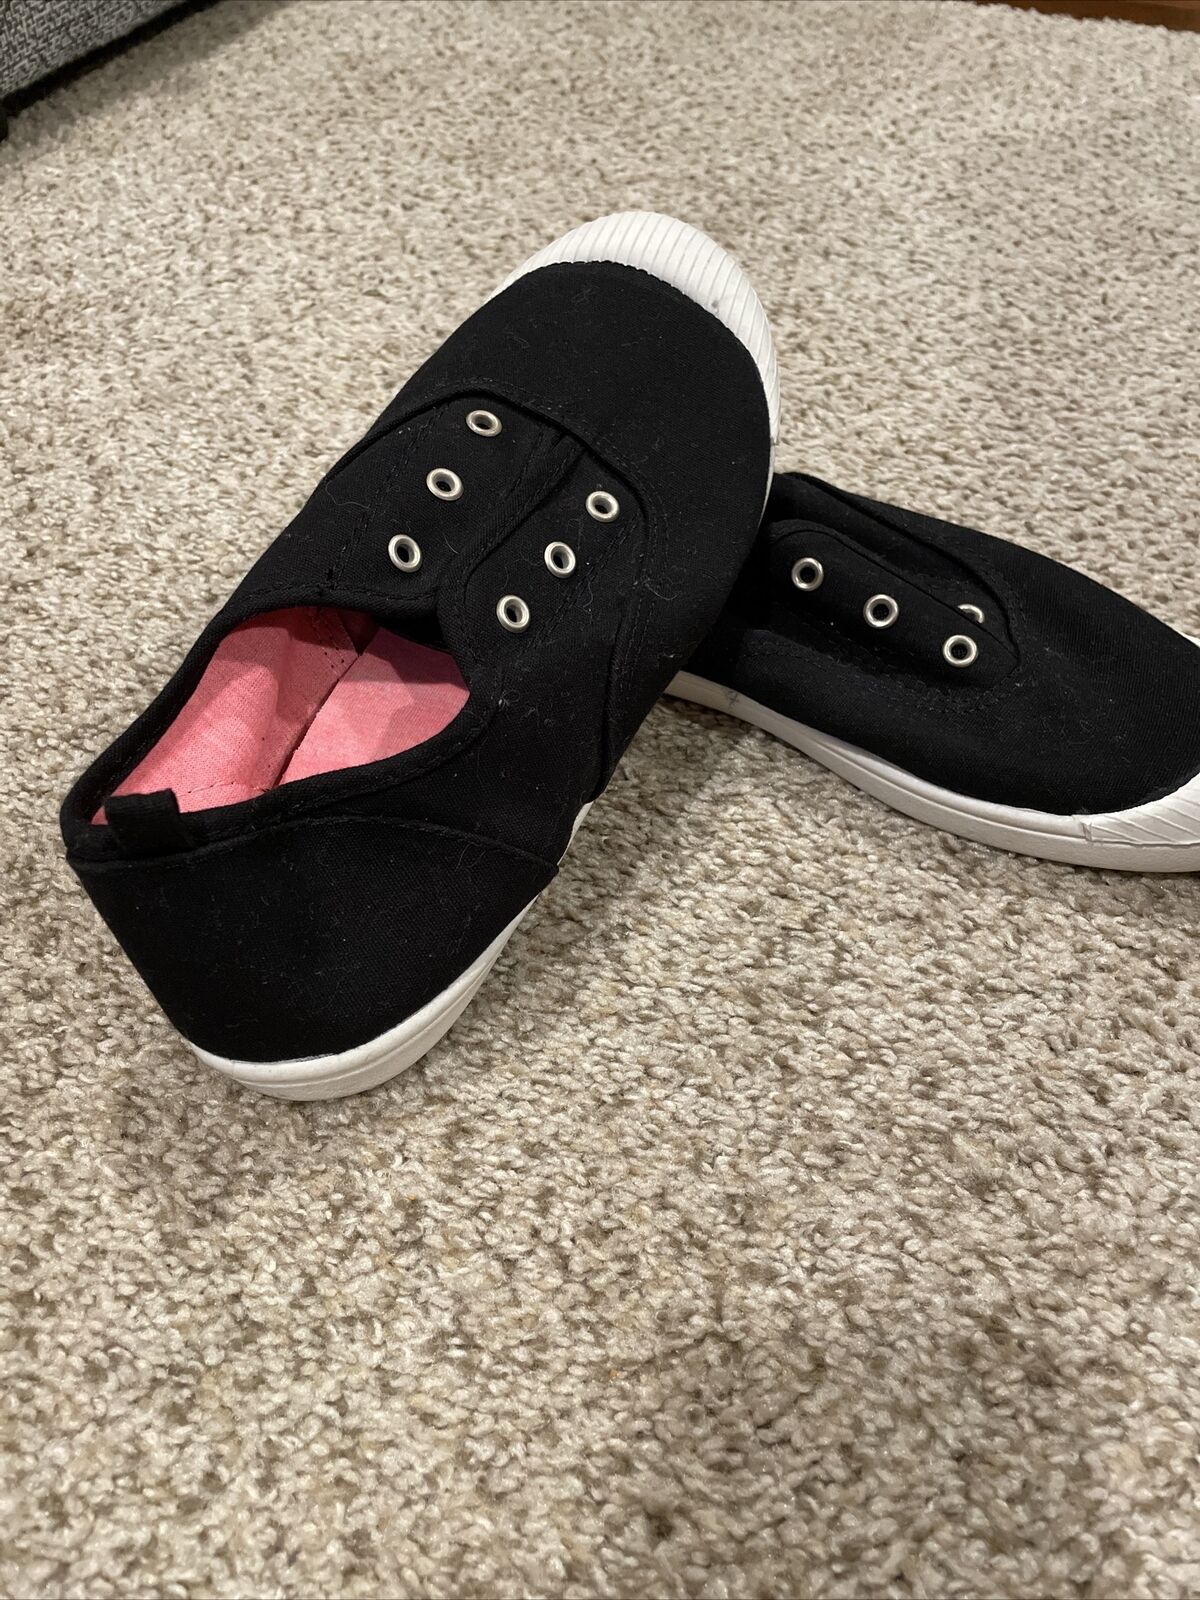 Cat & Jack shoes size 5 | eBay